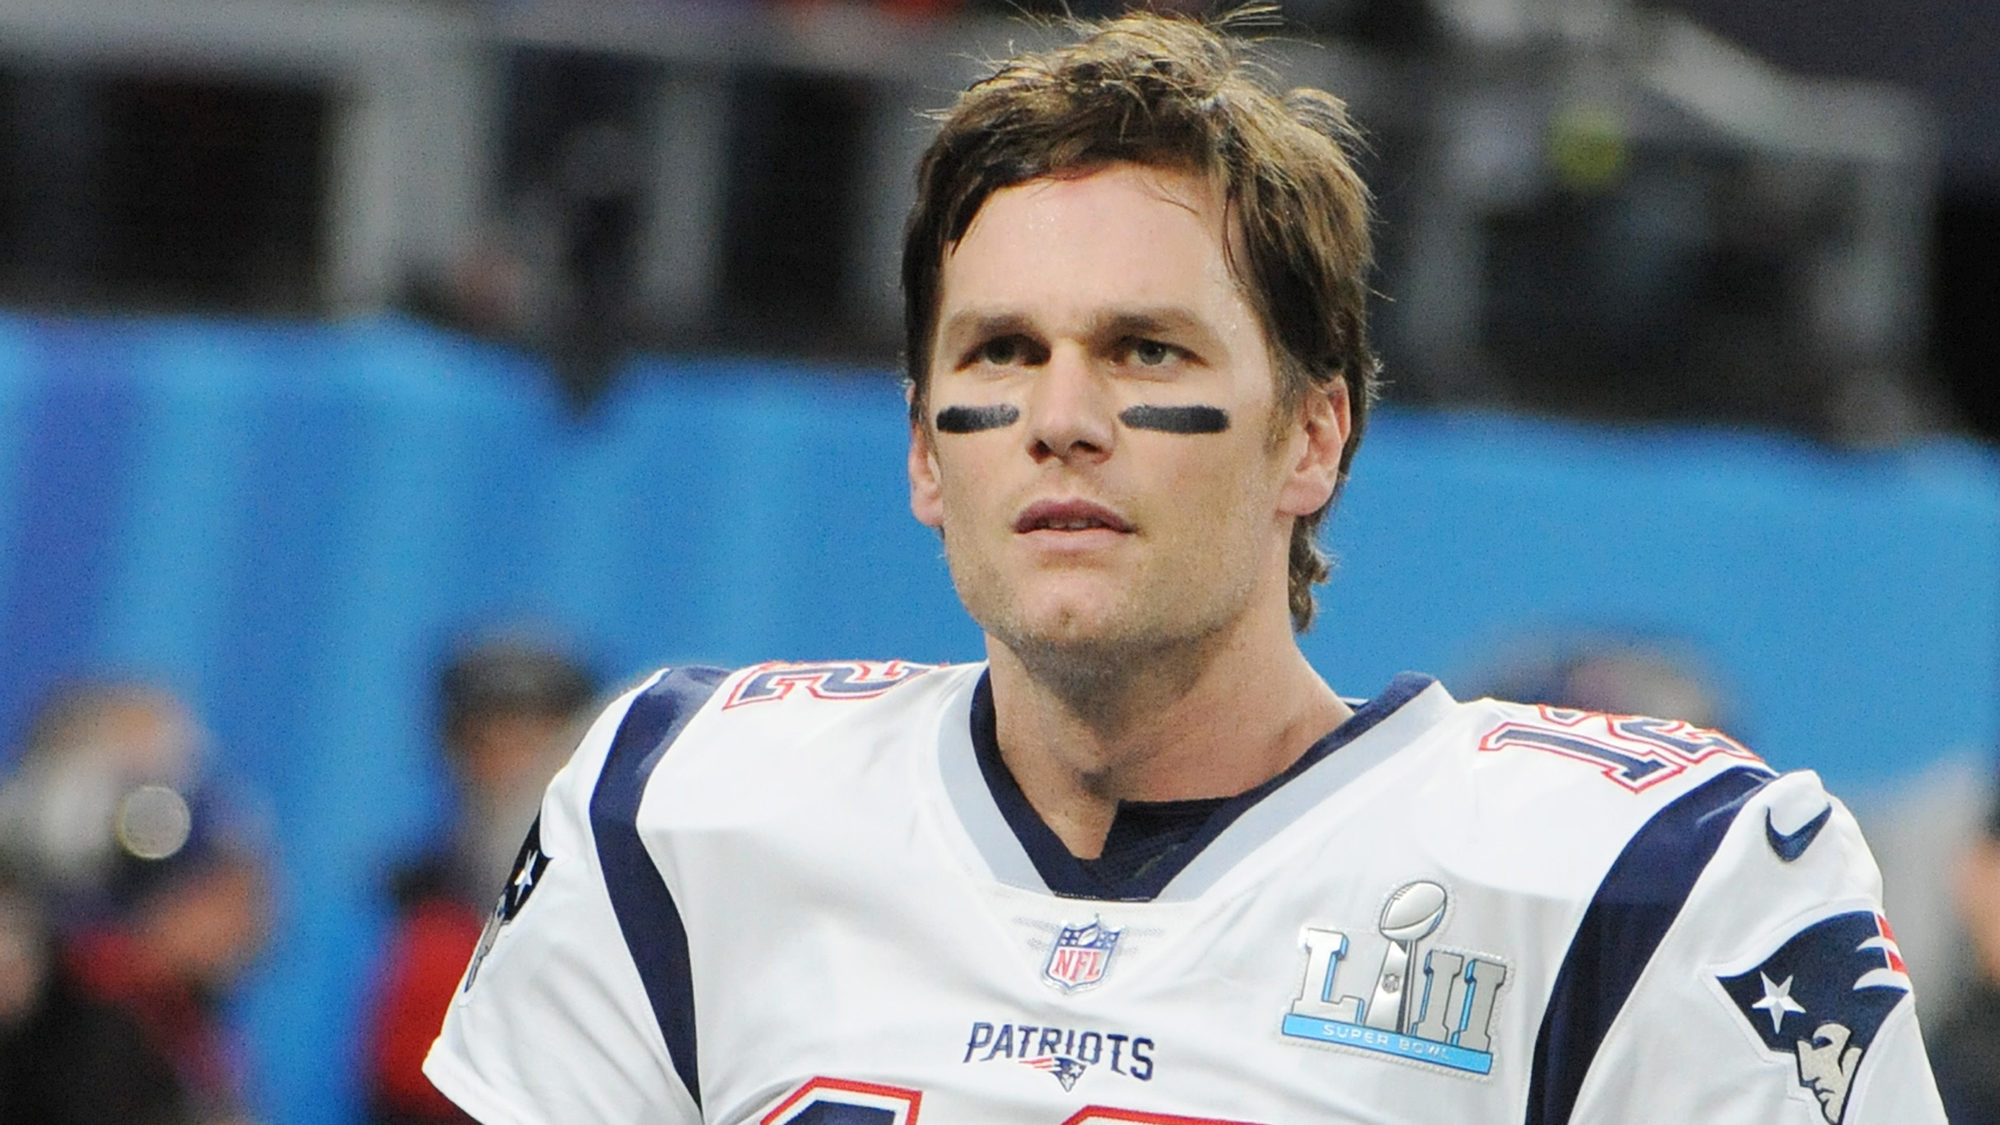 NFL Quarterback Tom Brady Drew Brees Philip Rivers